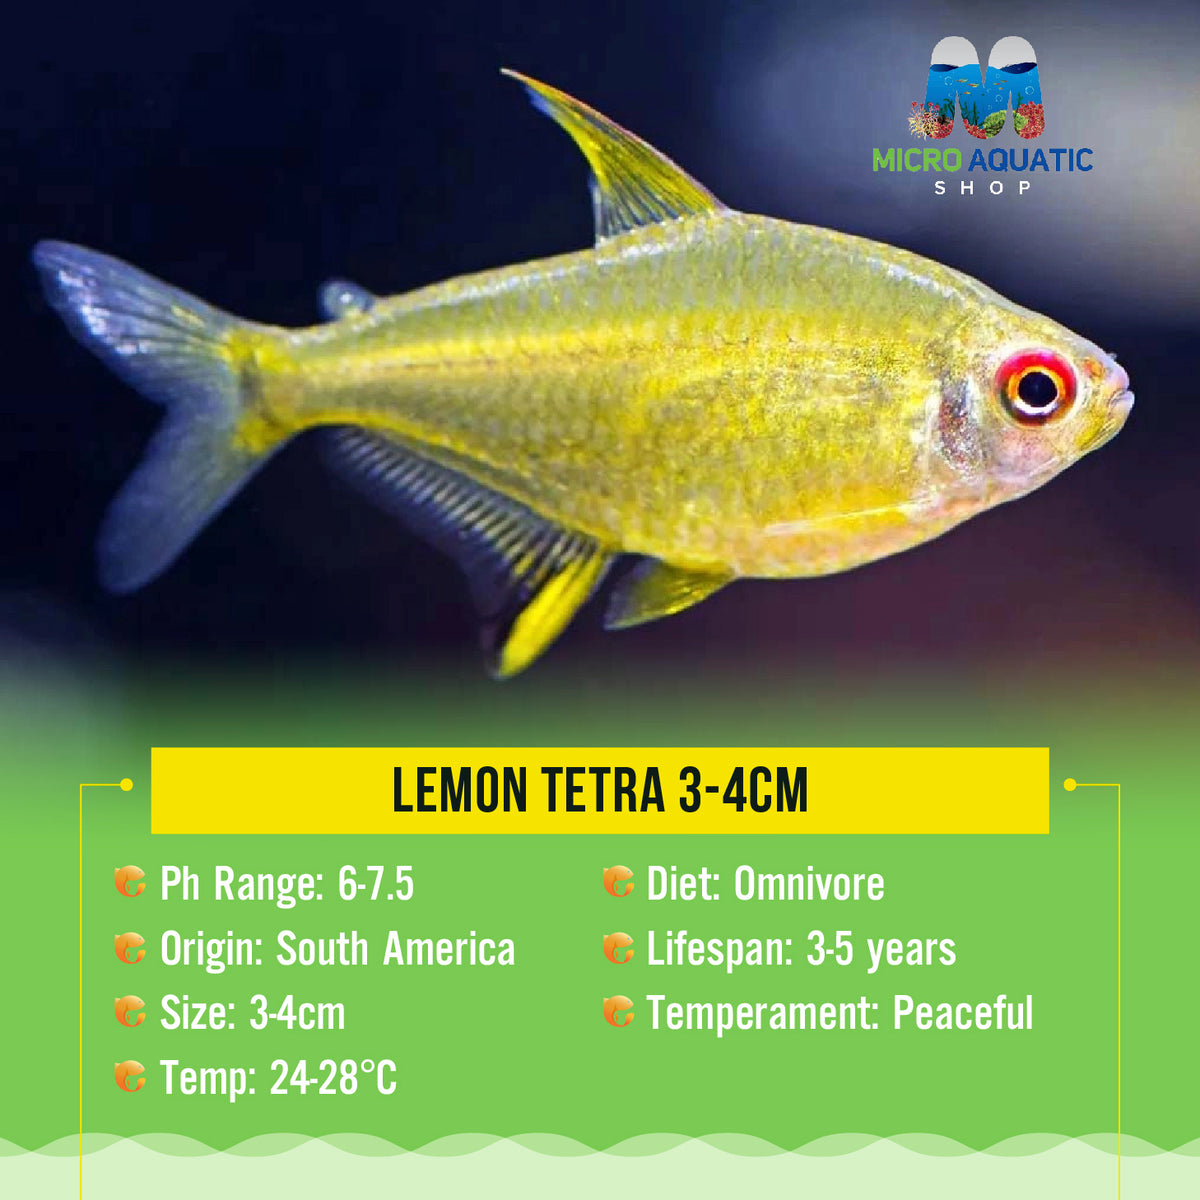 Lemon Tetra 3-4cm